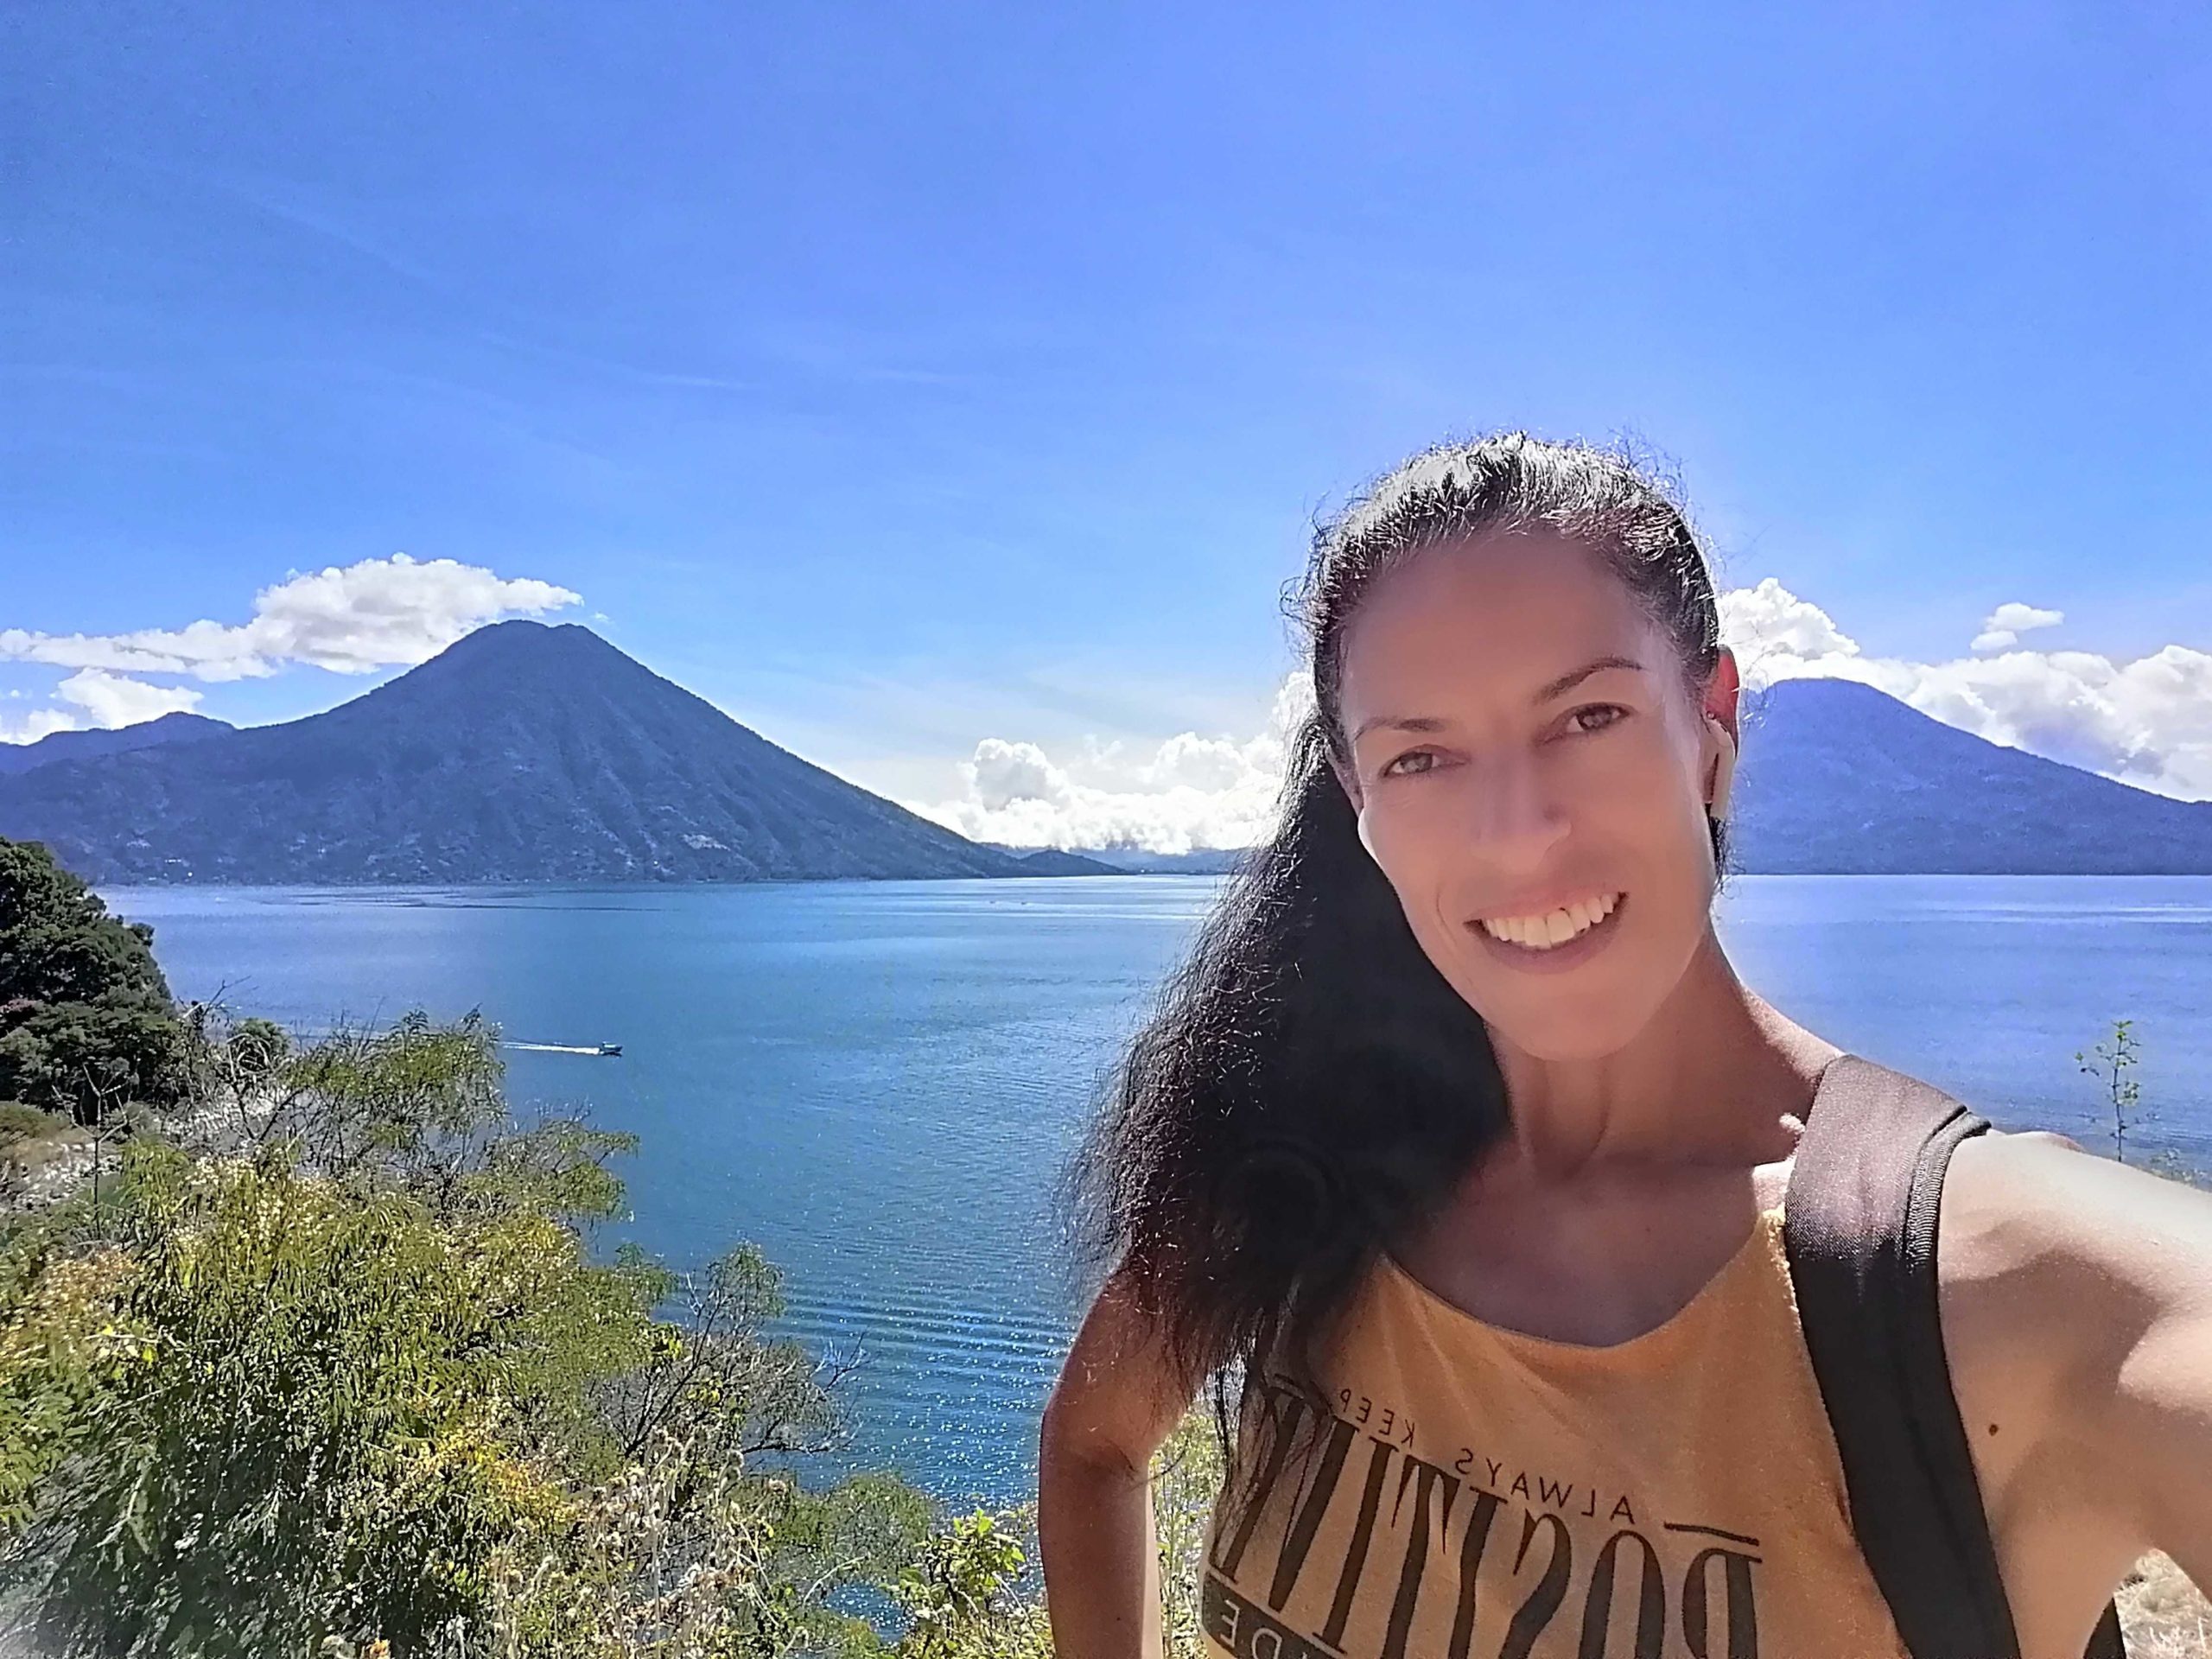 Tzununa Lac Atitlan